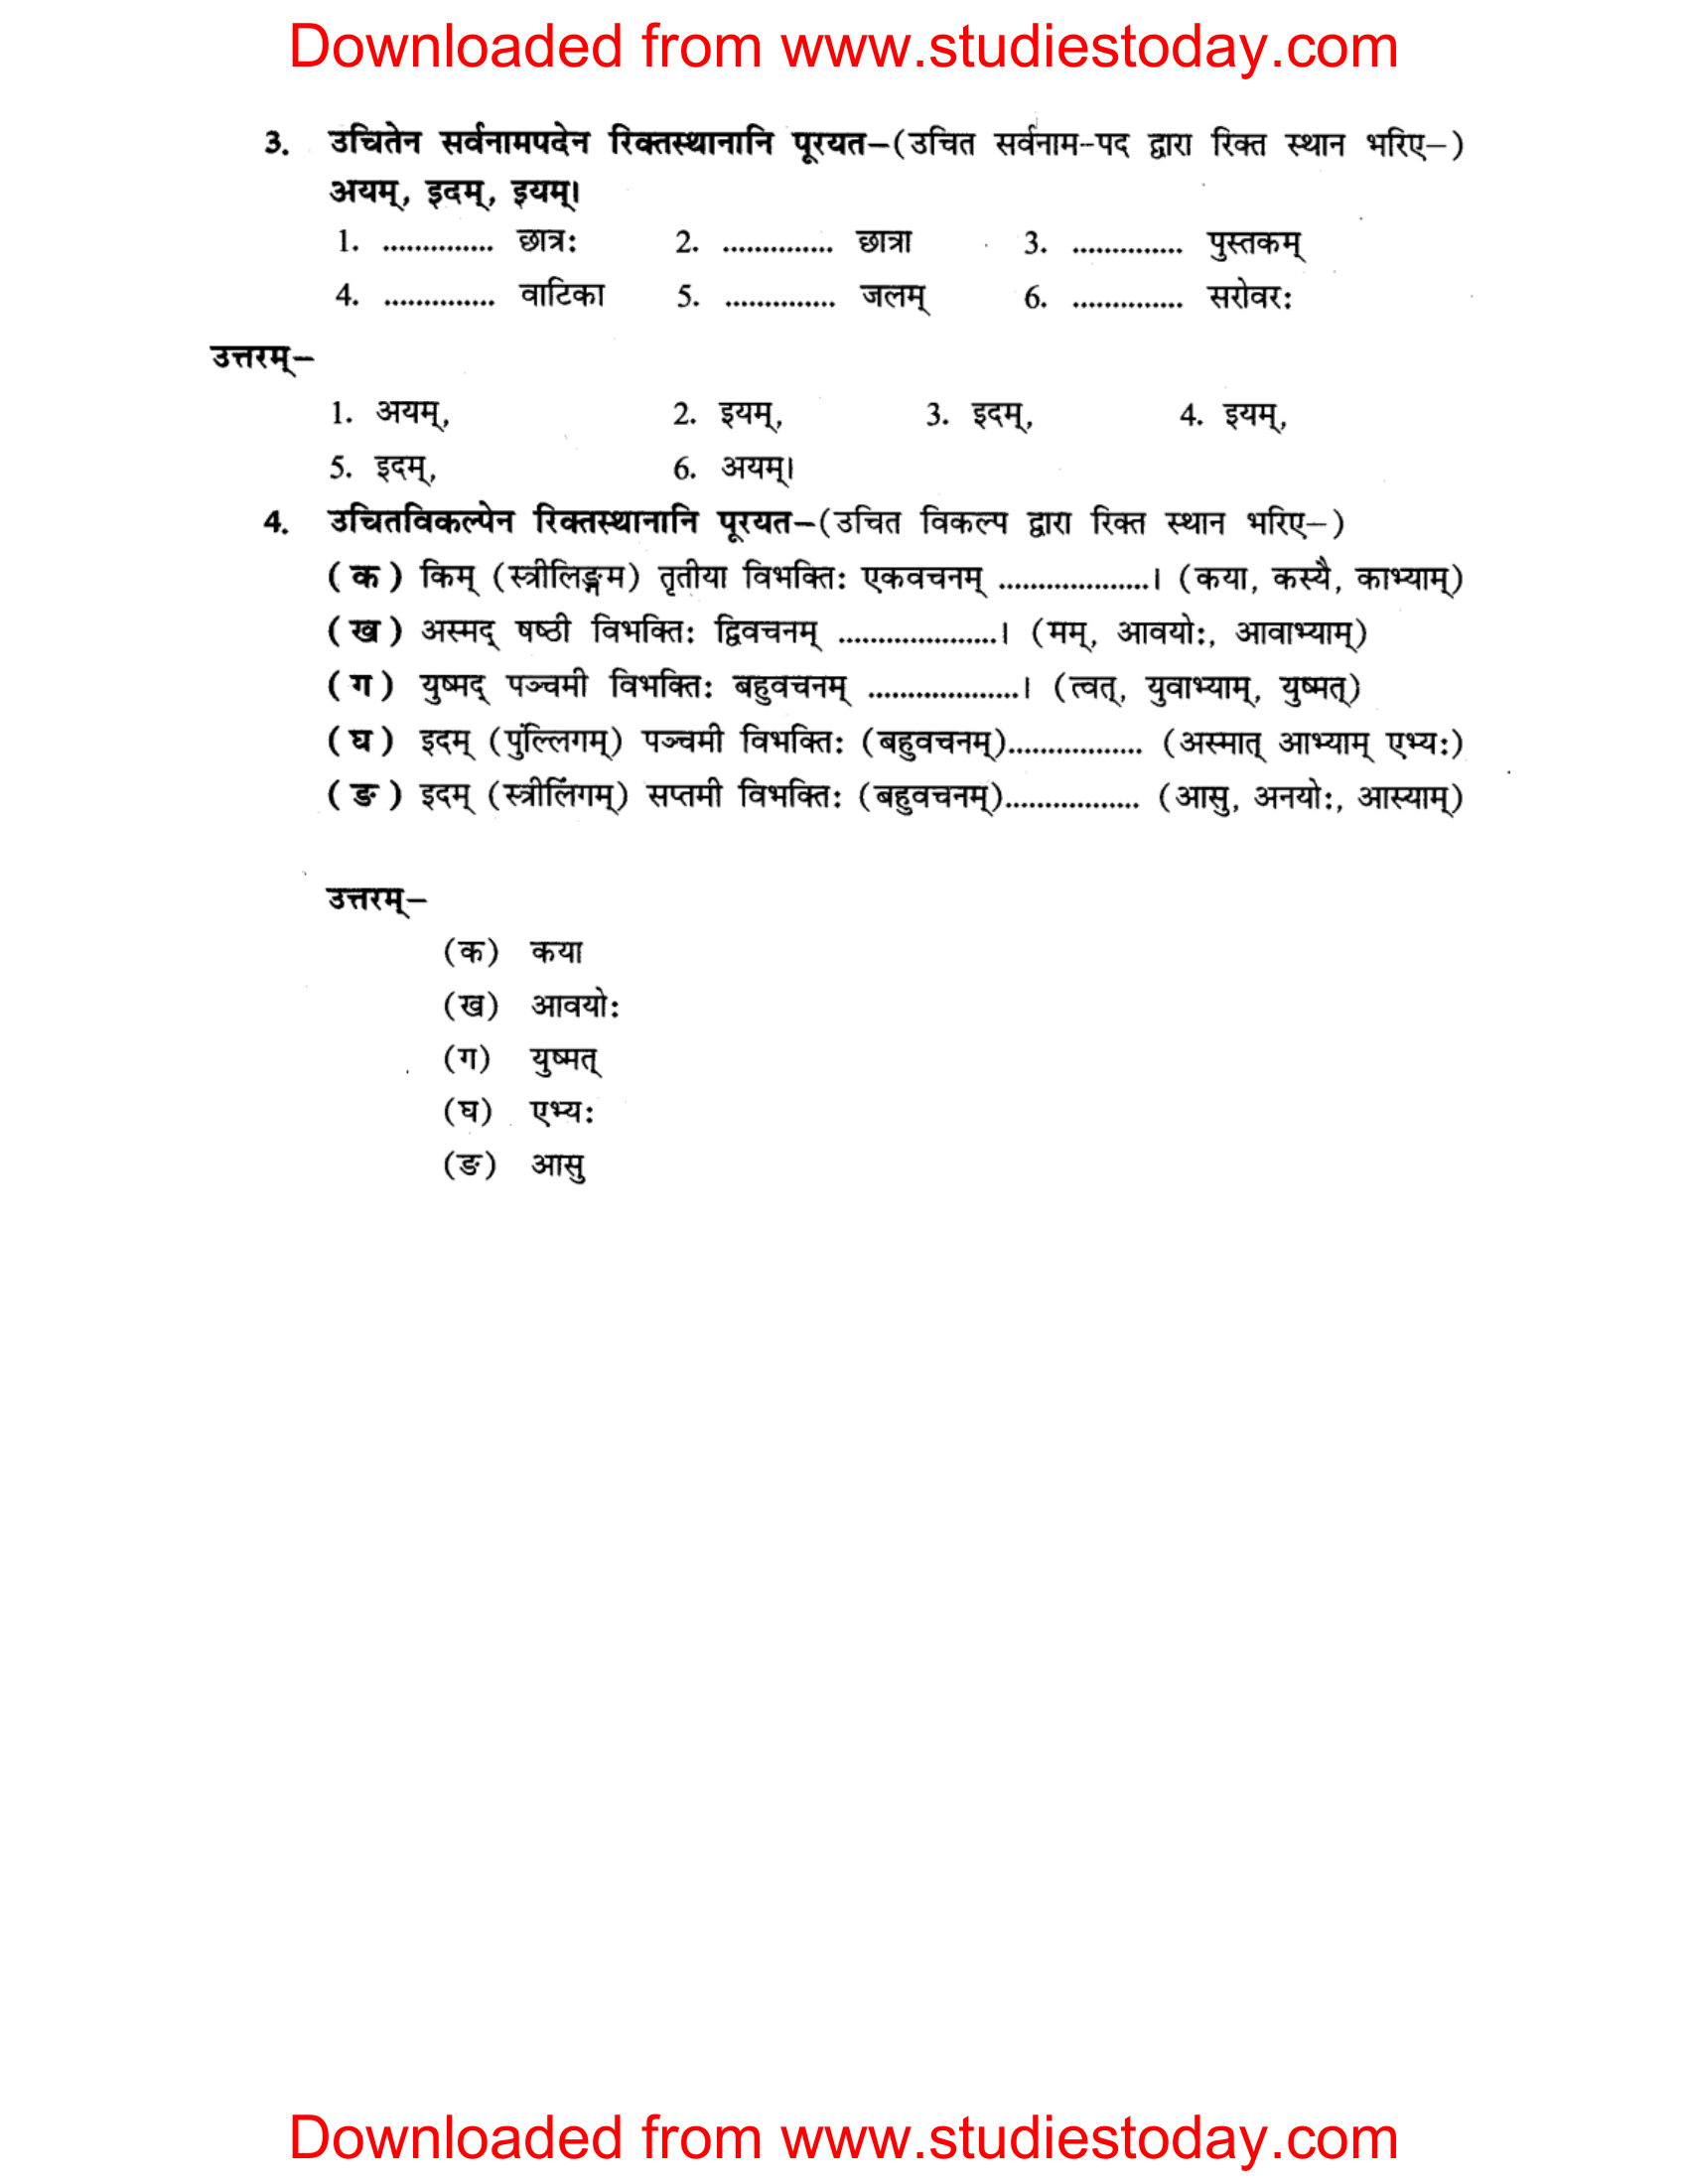 ncert-solutions-class-8-sanskrit-chapter-5-srvnampadani-tatha-sankhyavachani-2